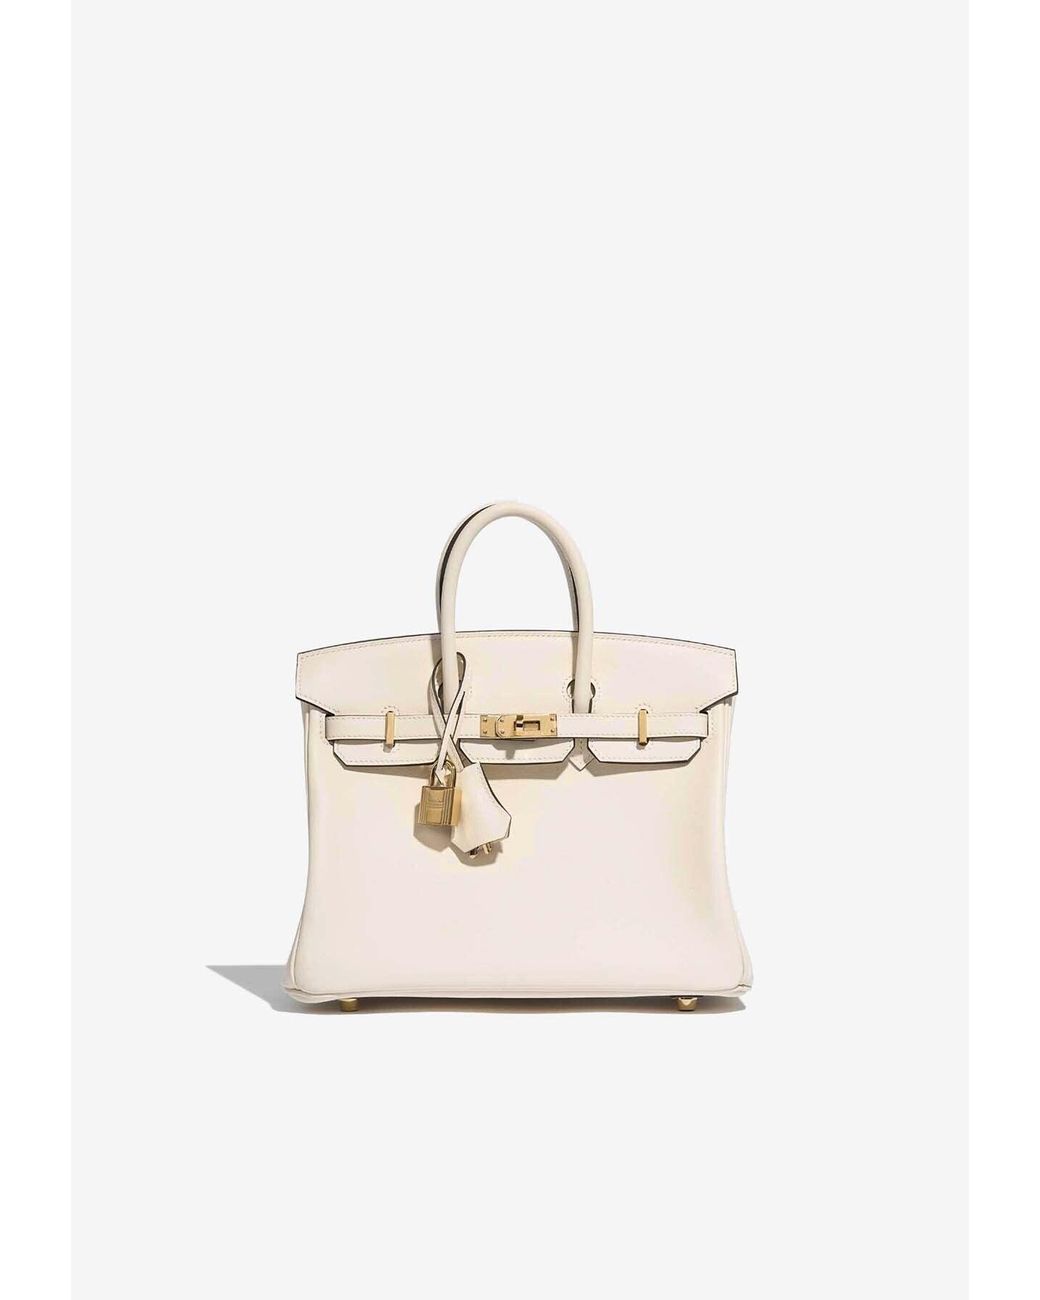 Hermès Birkin 25 Top Handle Bag In Nata Swift With Gold Hardware in ...